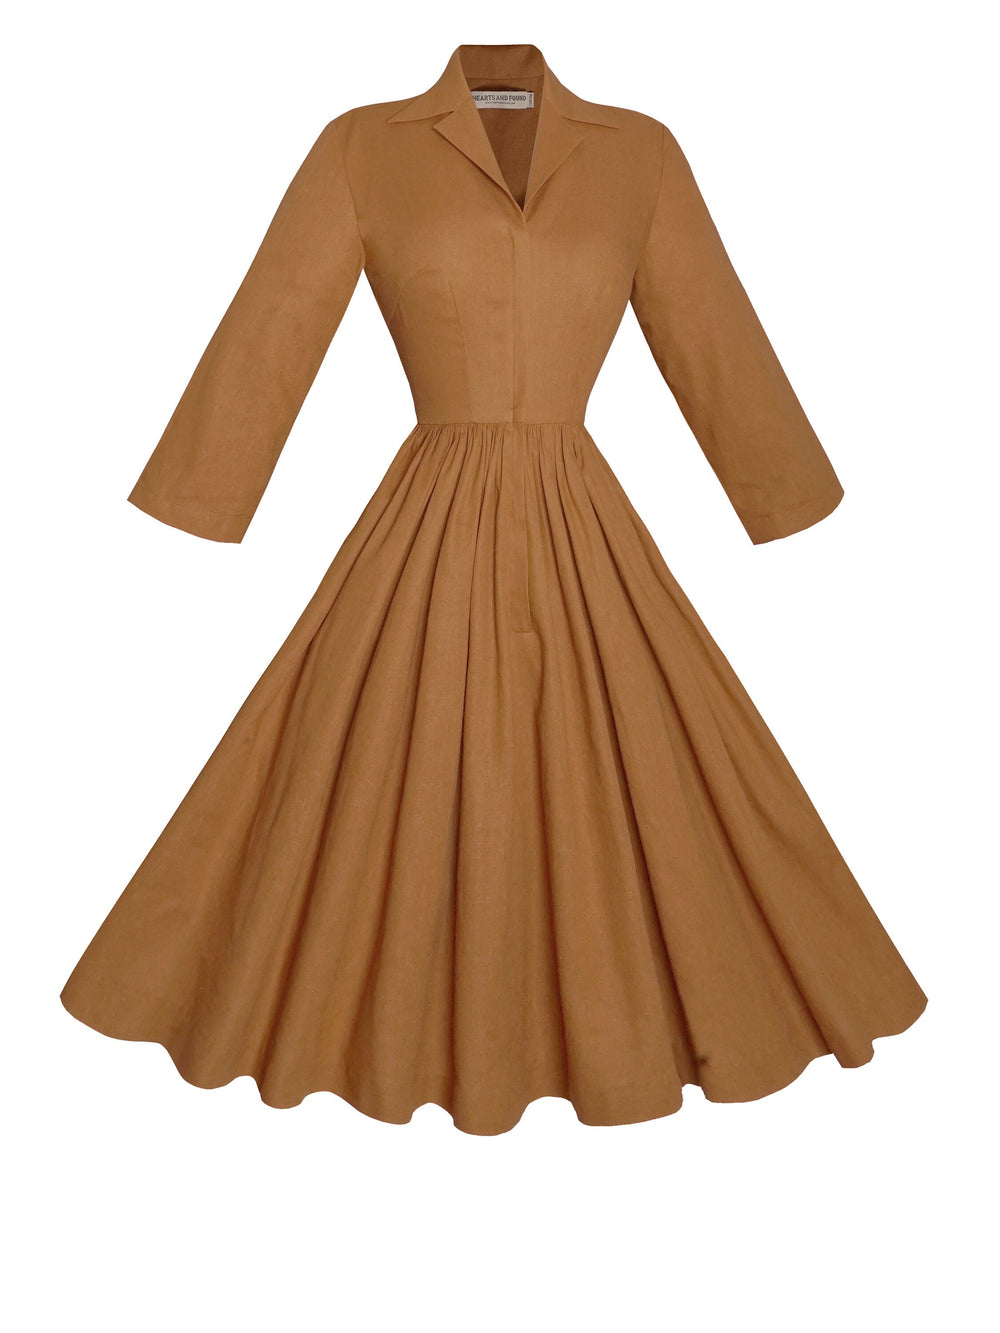 MTO - Natalie Dress in Caramel Linen